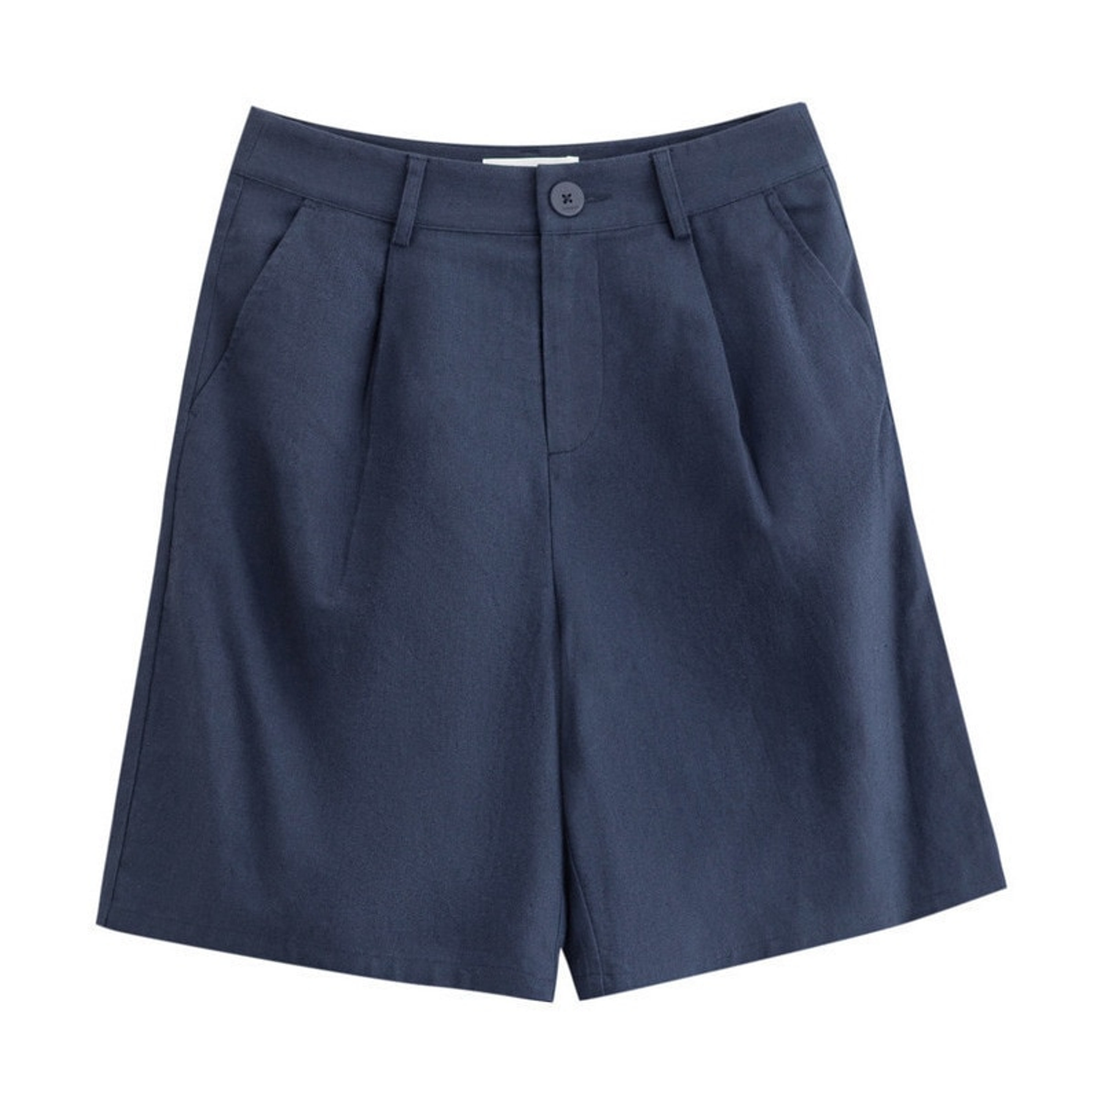 Women's Summer Casual Cotton Mid Waist Shorts